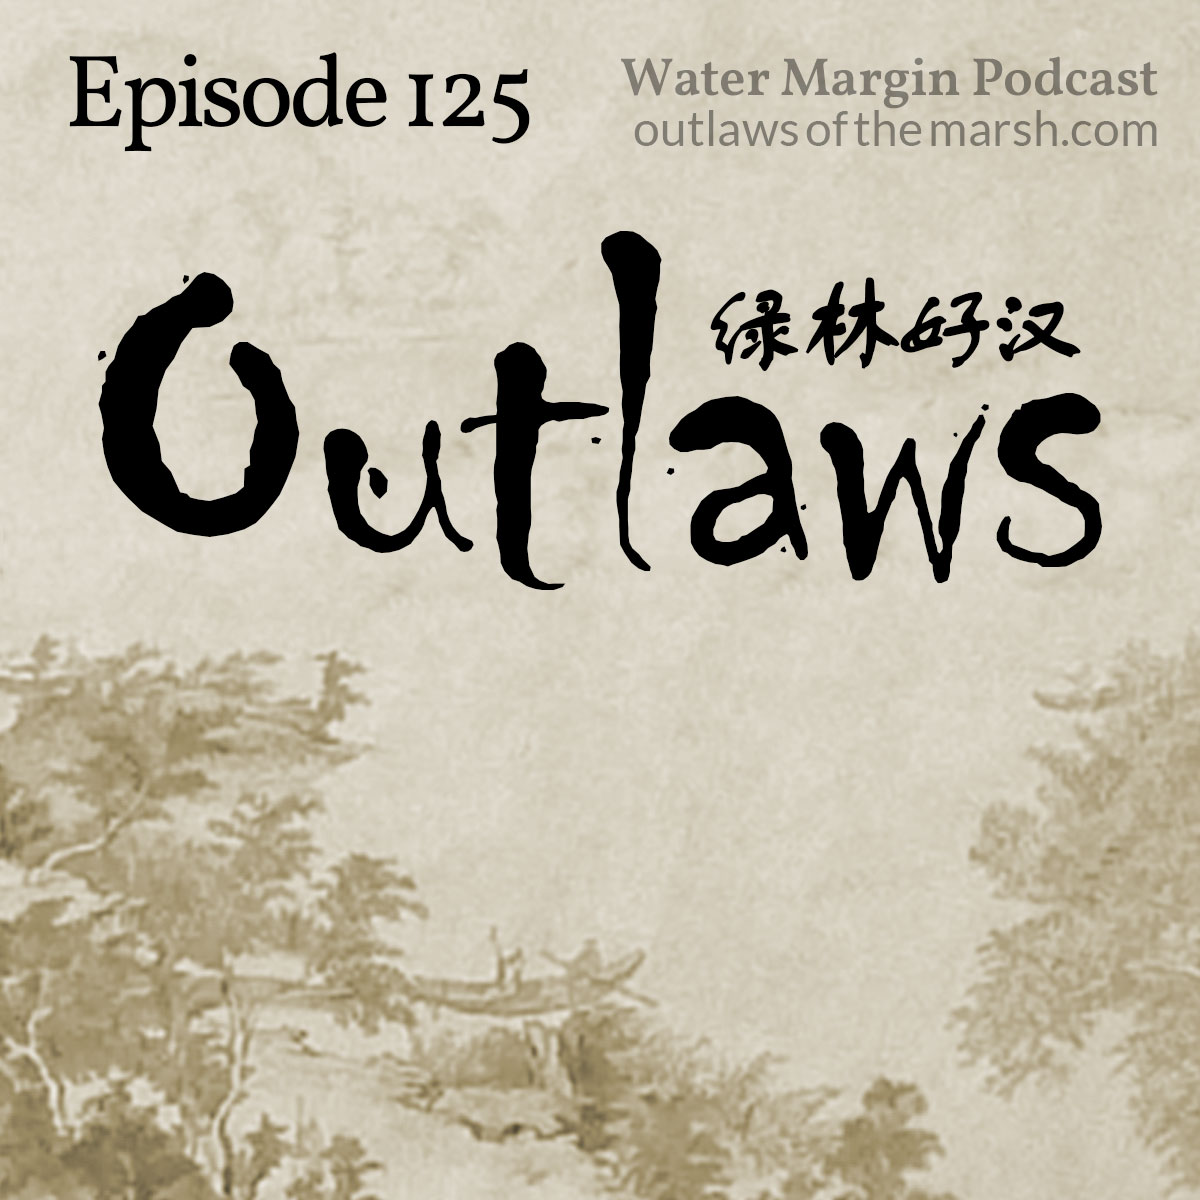 Water Margin Podcast: Episode 125